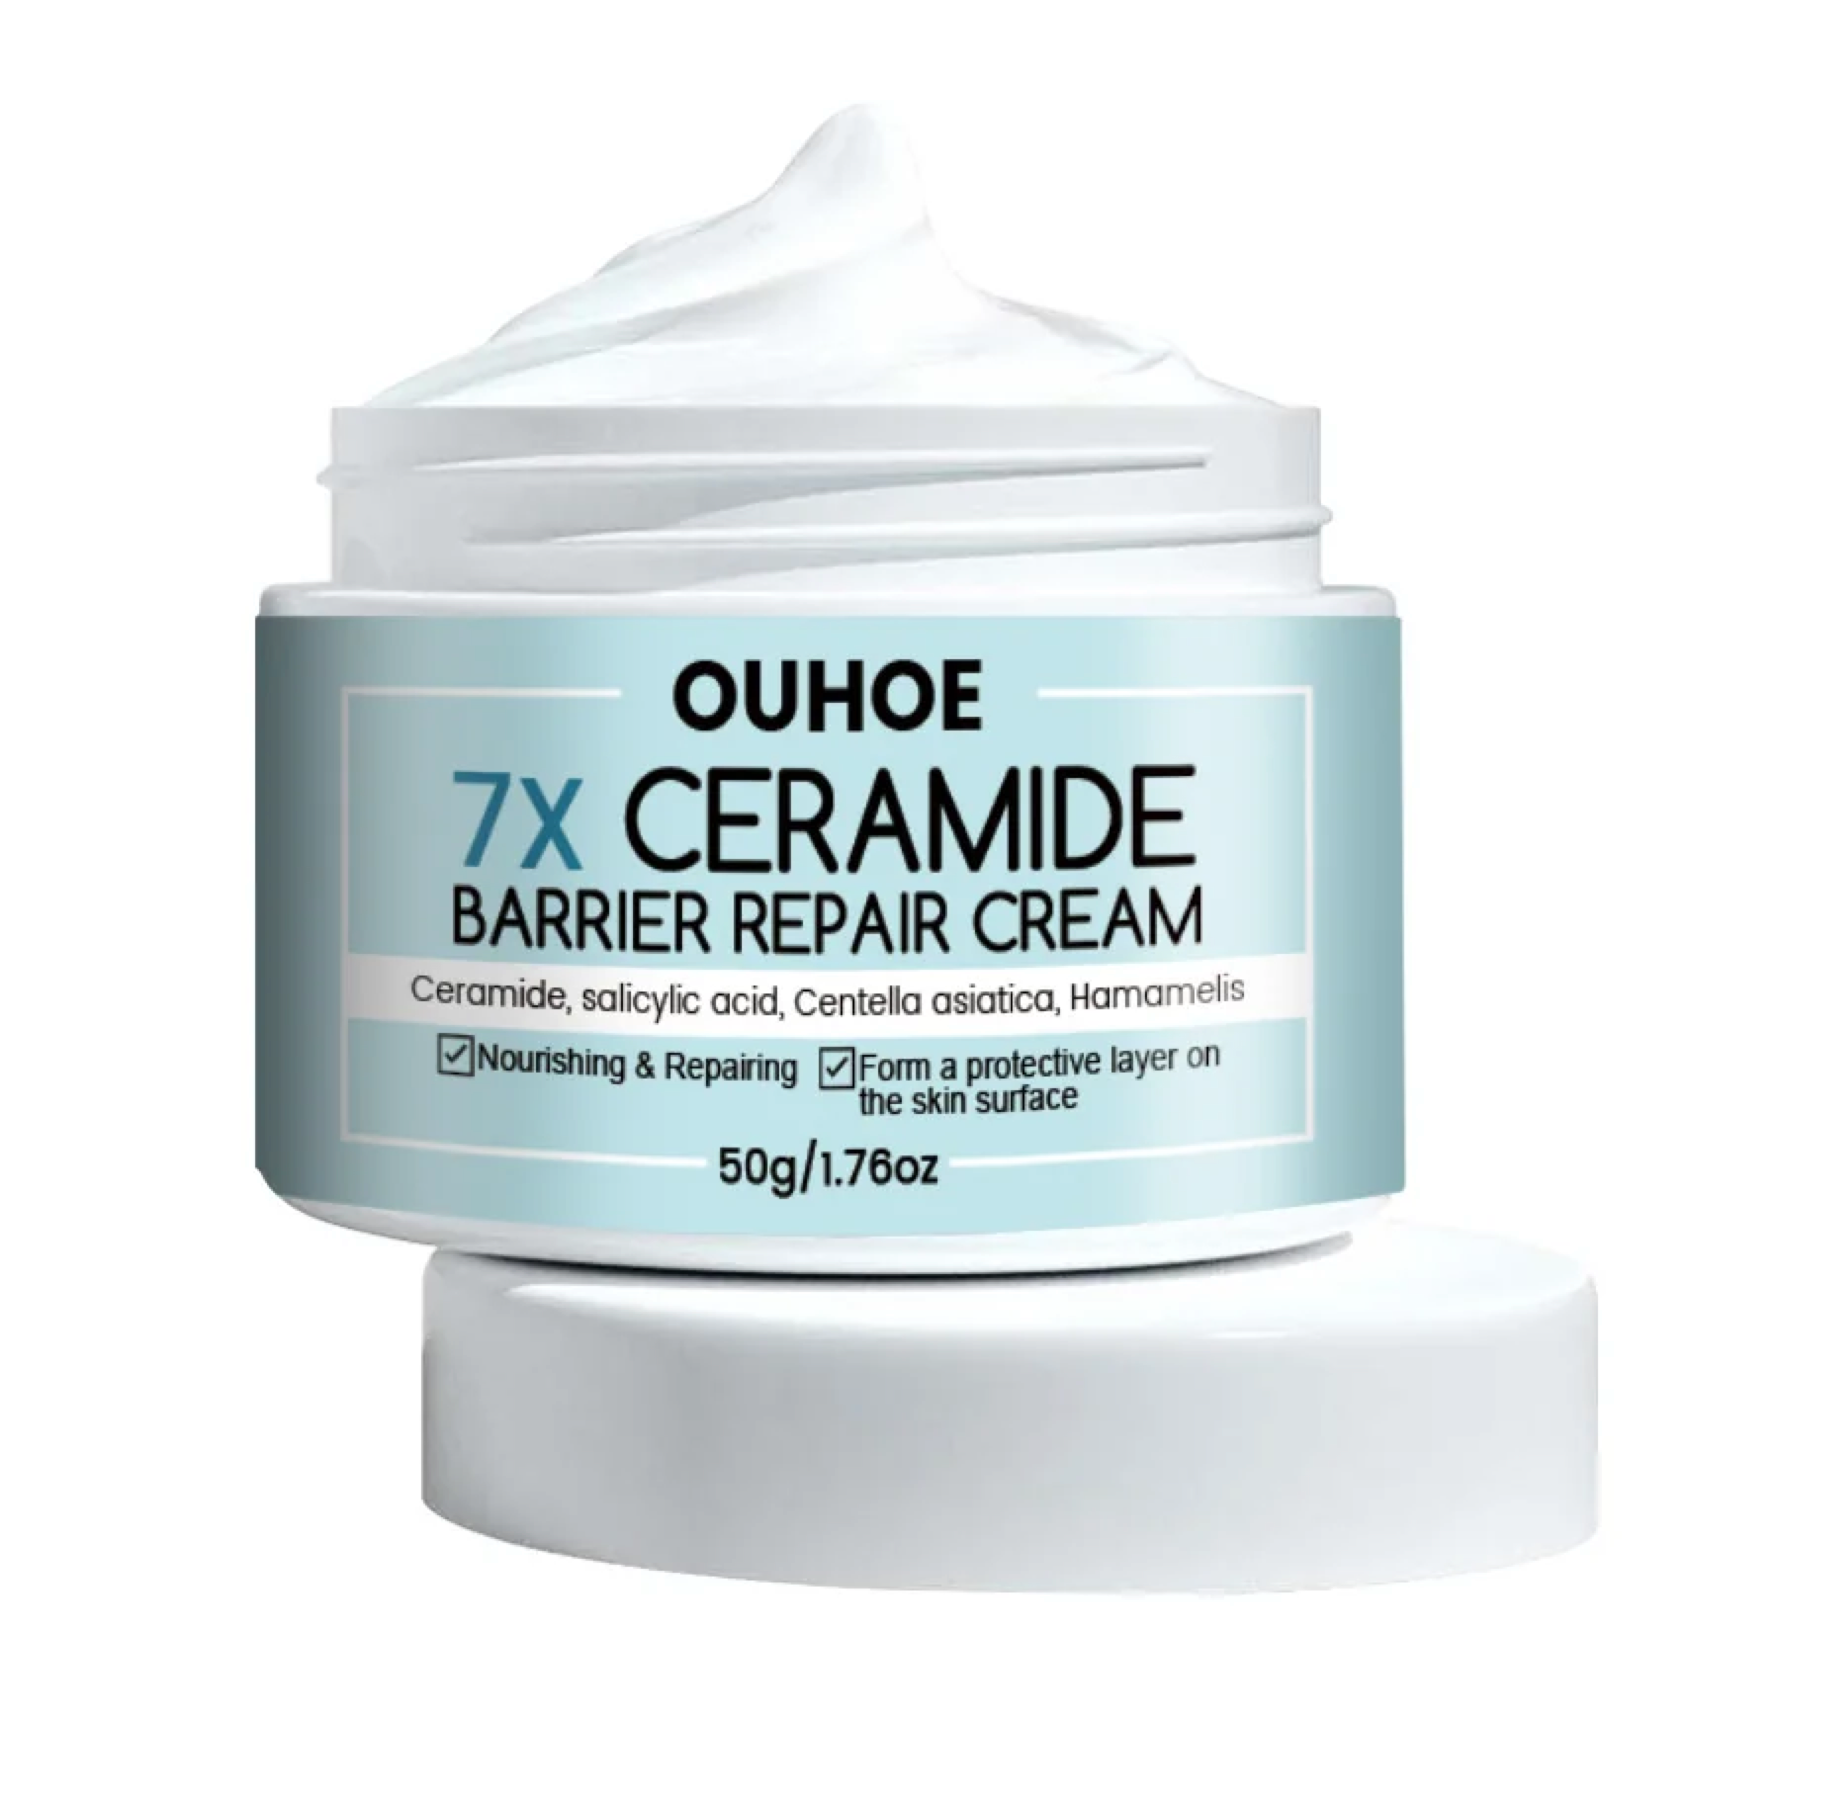 Ouhoe 7 x Ceramide Barrier Repair Cream 50g